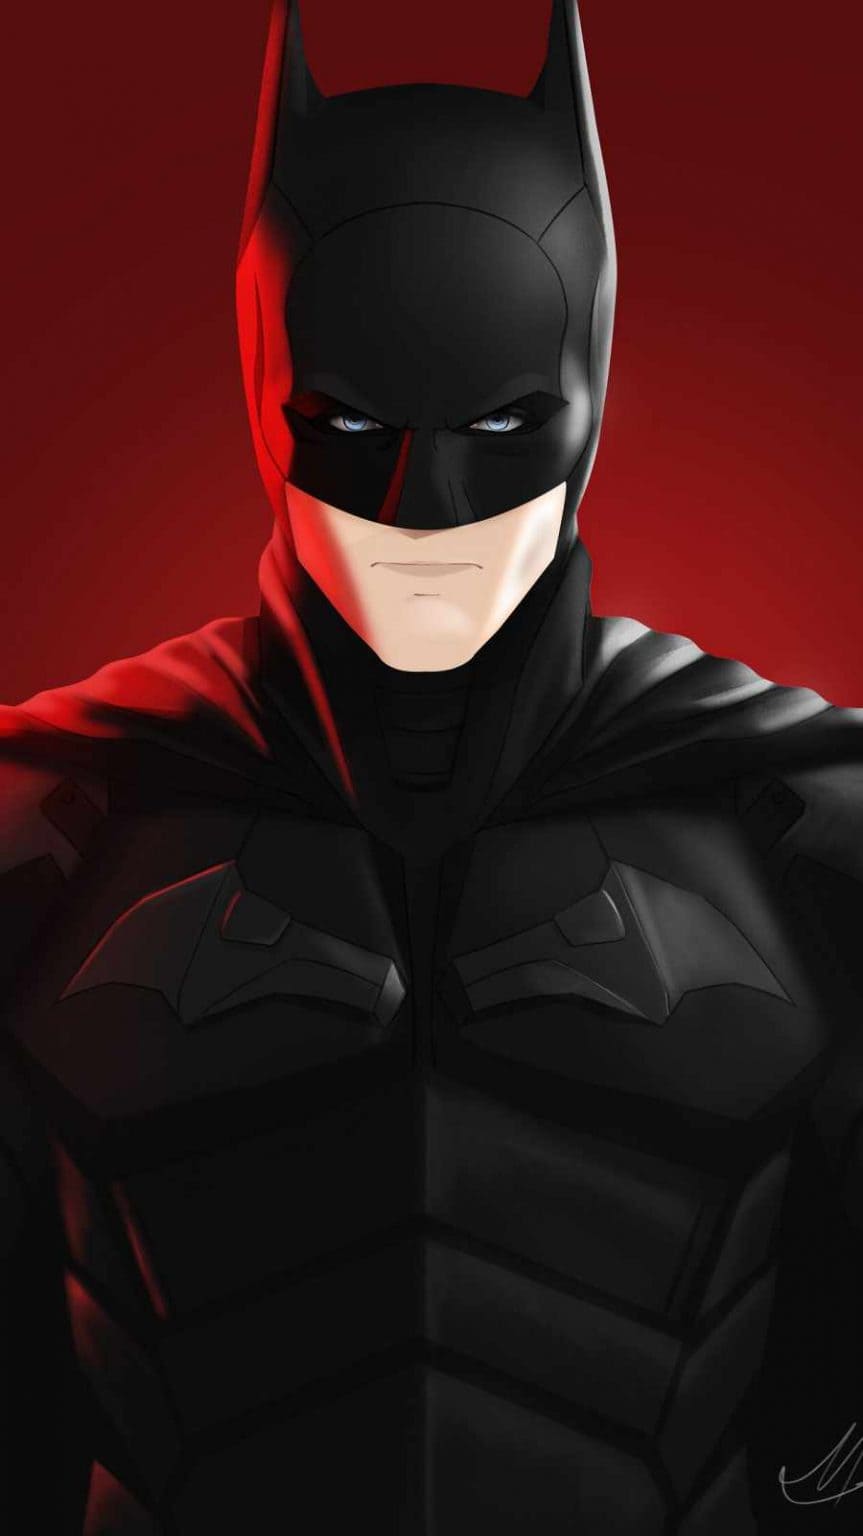 Batman Movie Portrait iphone 13 pro max wallpaper, Best iPhone Wallpaper and iPhone background, WallpaperUpdate, Best iPhone Wallpaper and iPhone background